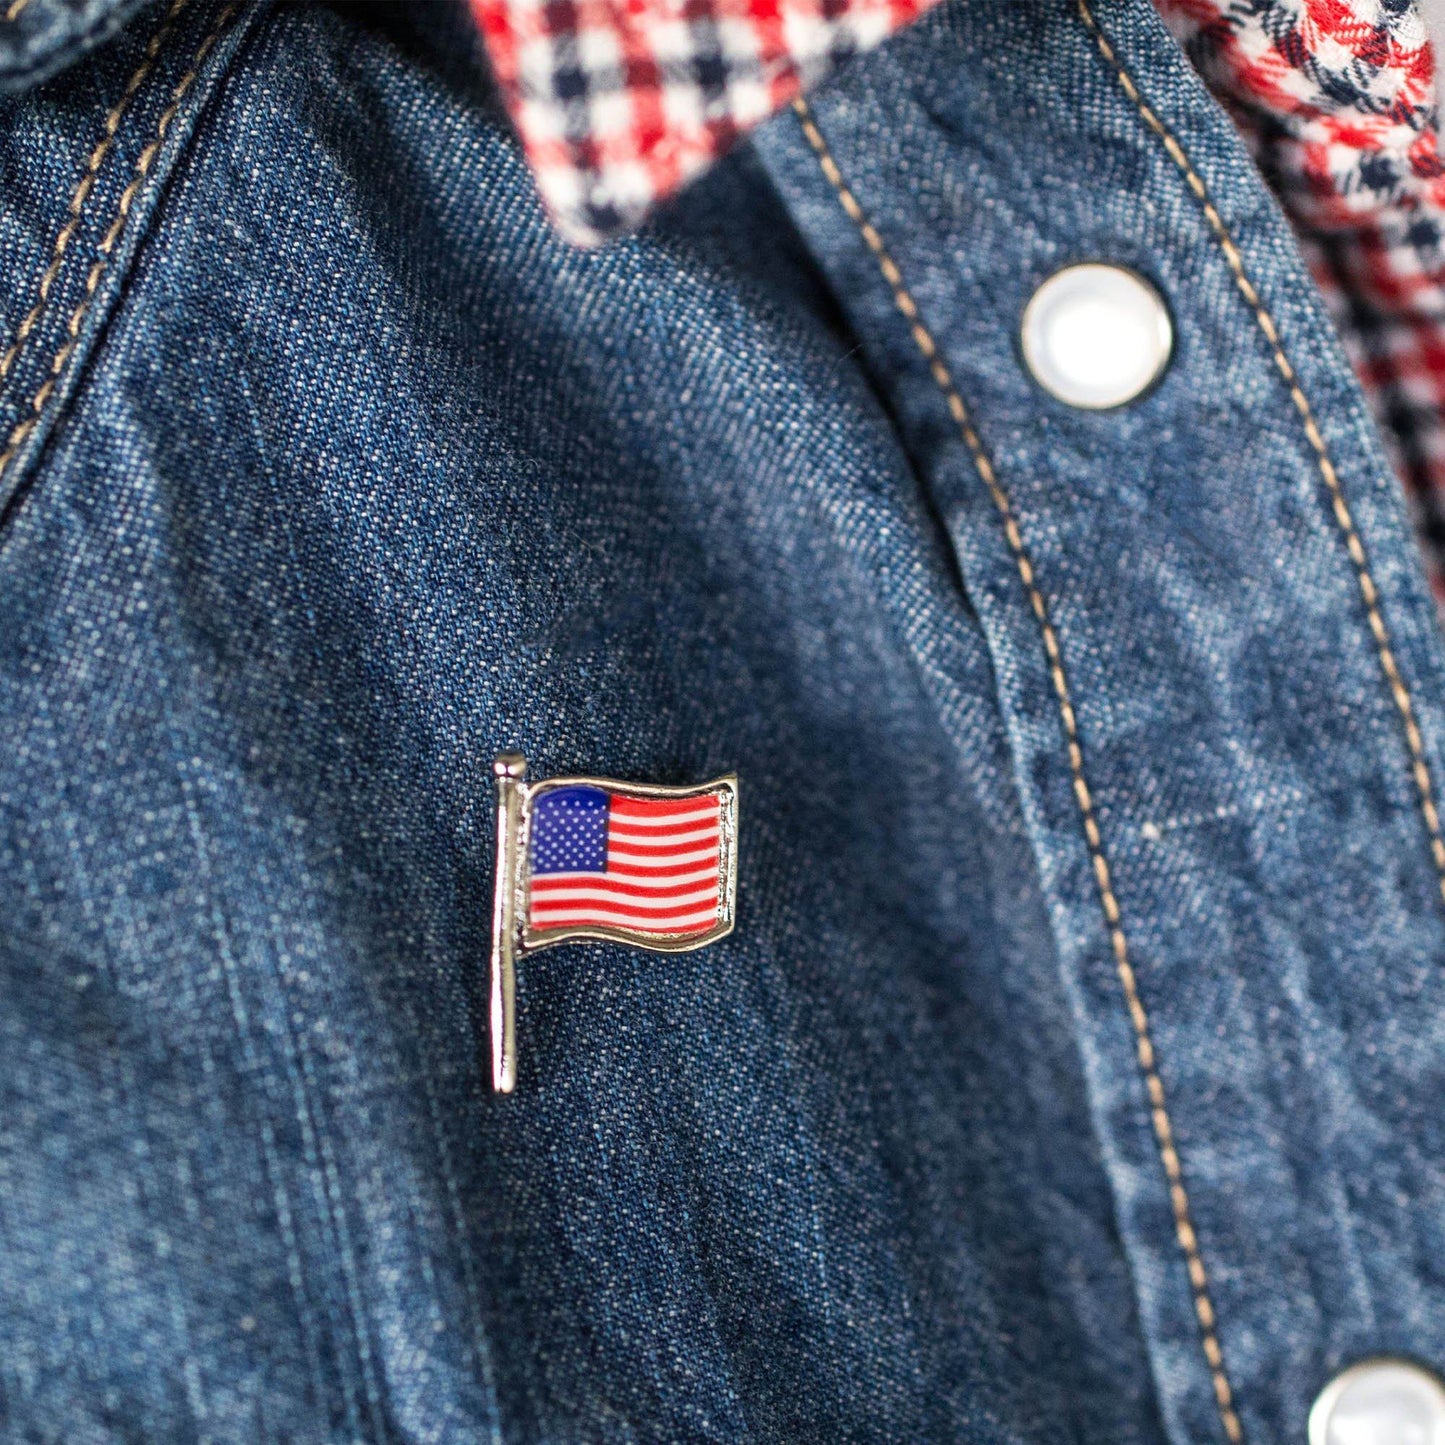 Promo - PROMO - Veteran-Made American Flag Pin